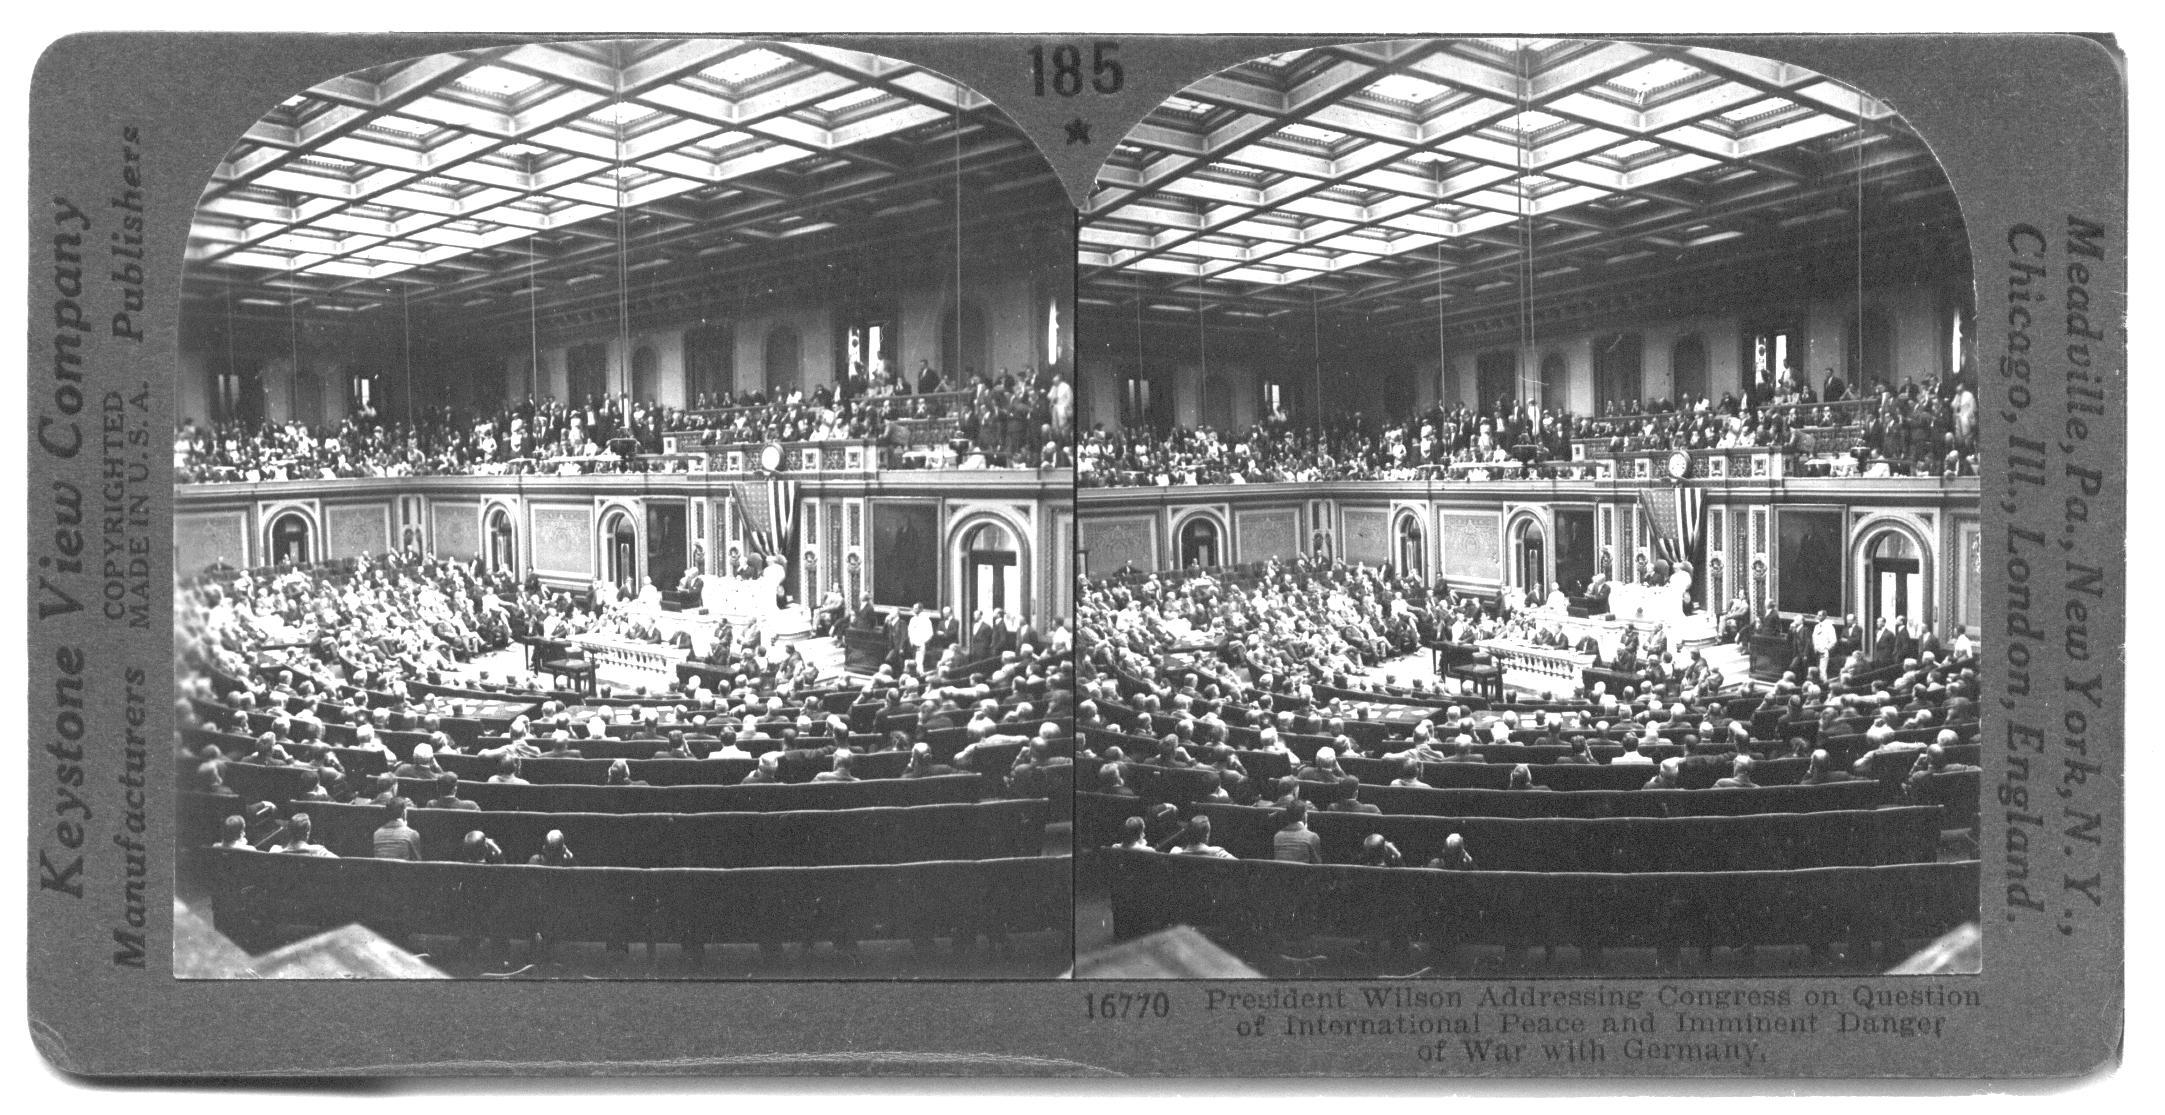 President Wilson Addressing Congress on Question of International Peace